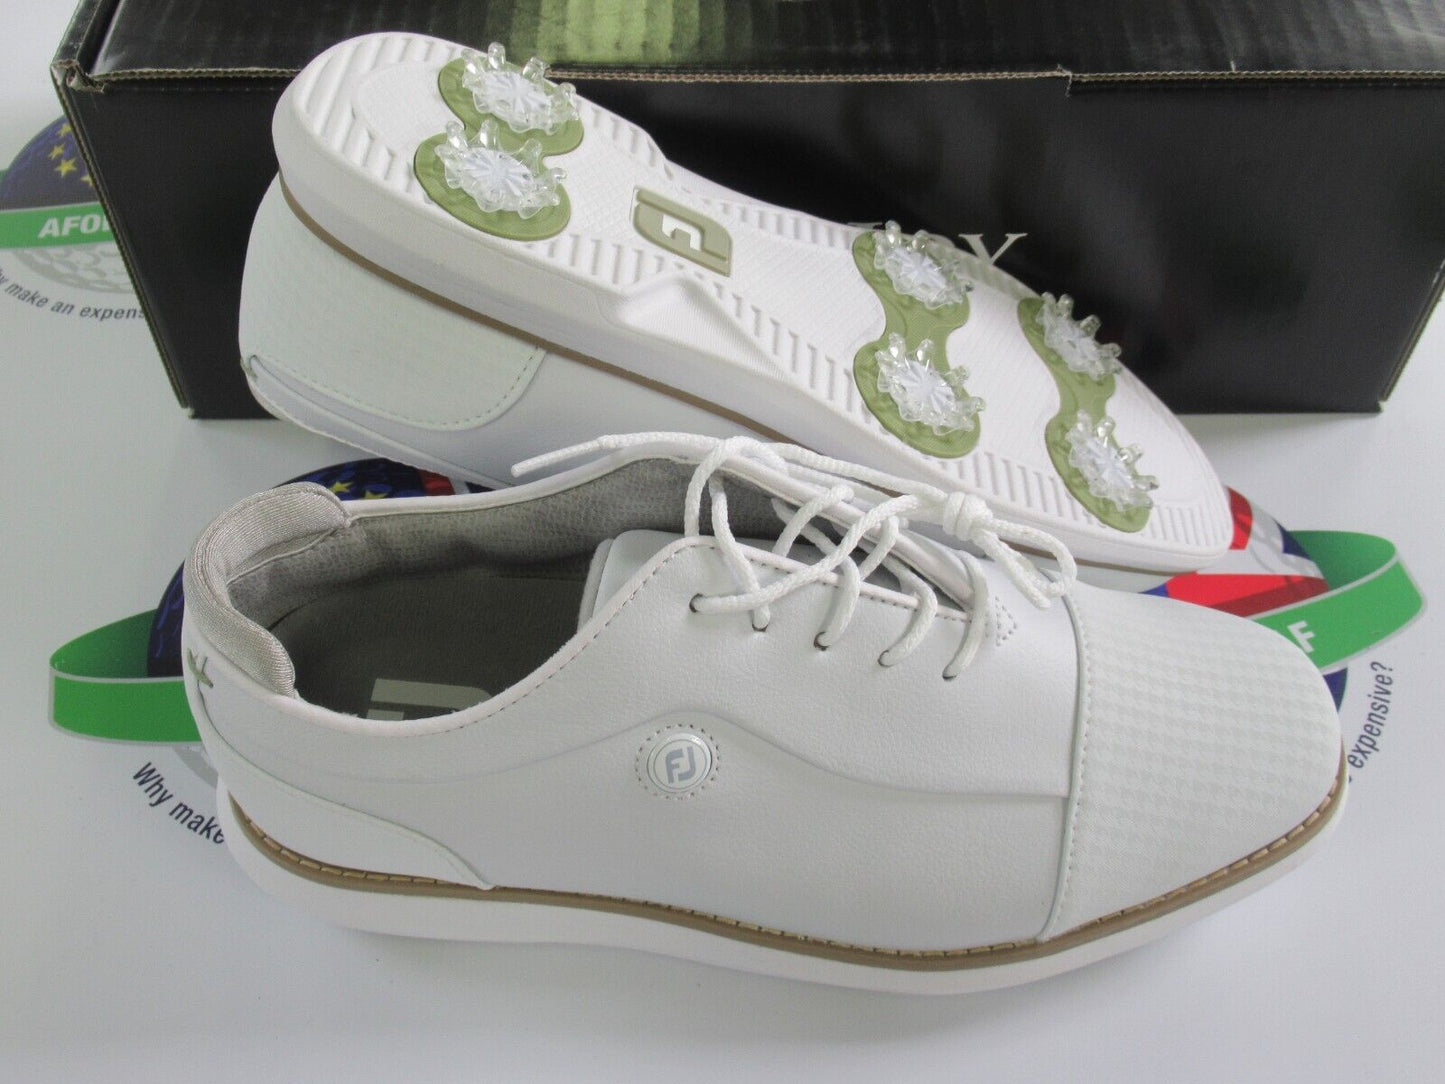 footjoy fj traditions womens golf shoes 97914k white uk size 3 medium